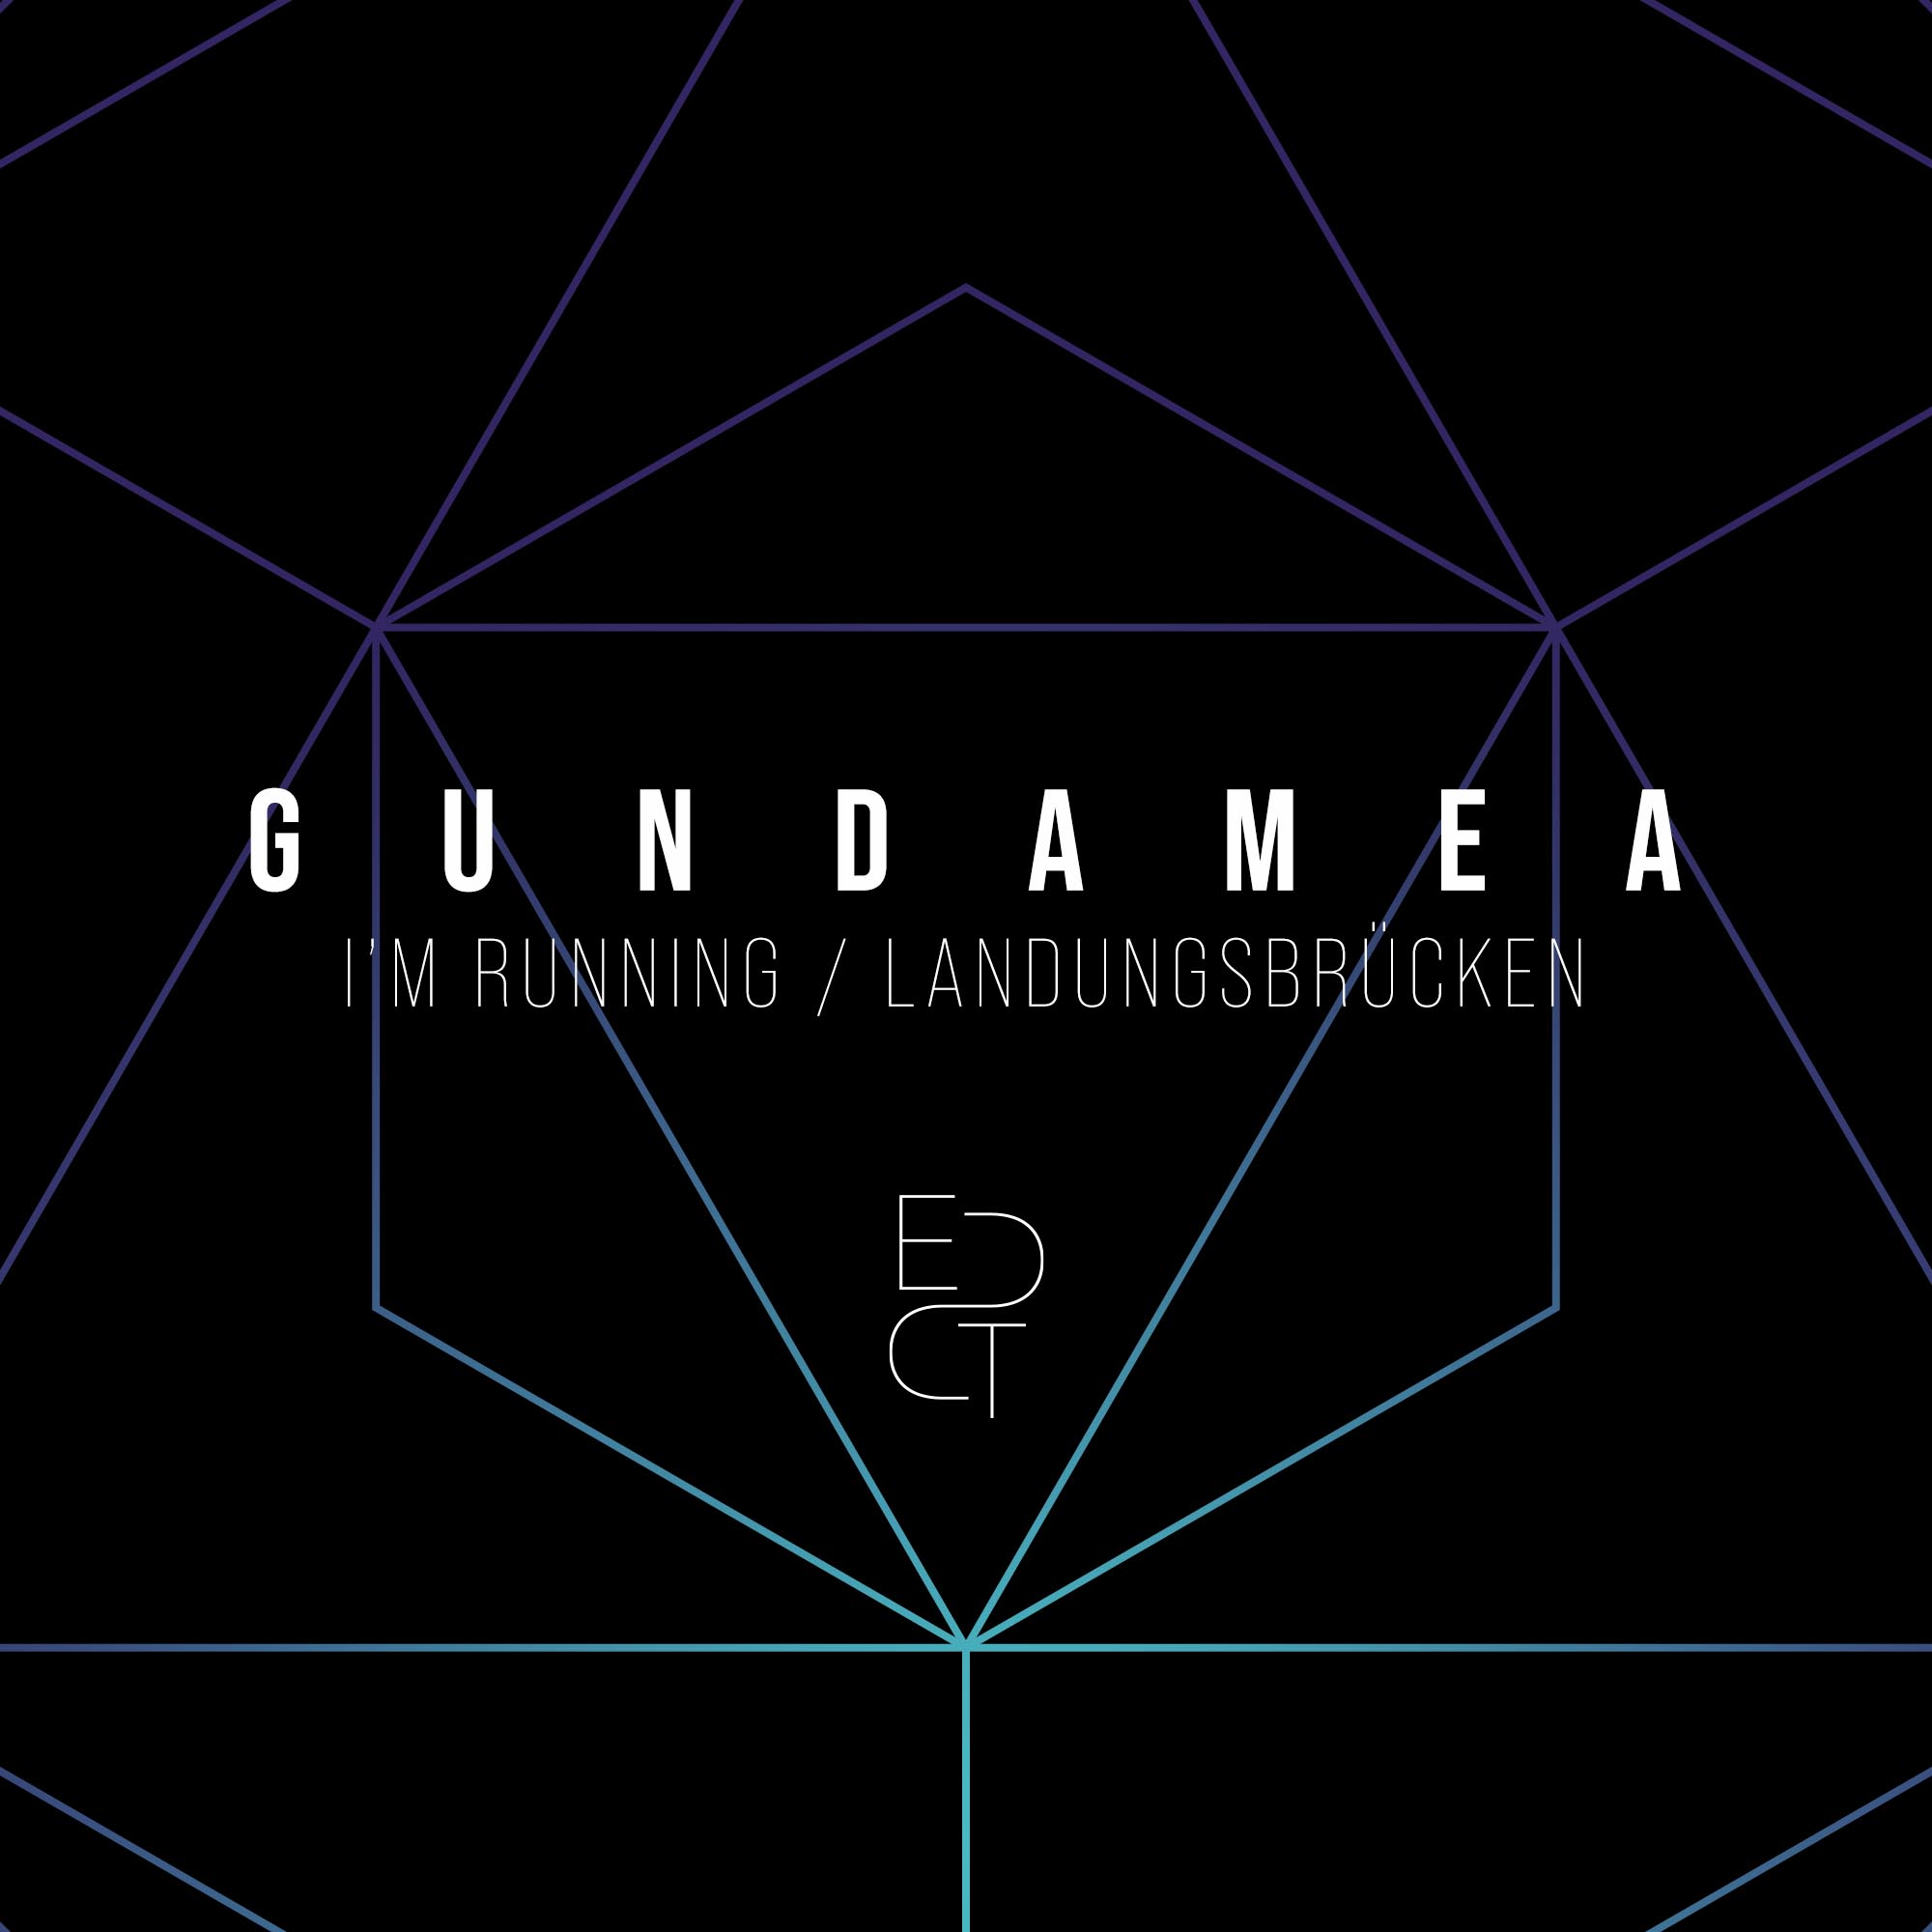 Gundamea presents I'm Running plus Landungsbrücken on EDCT Music